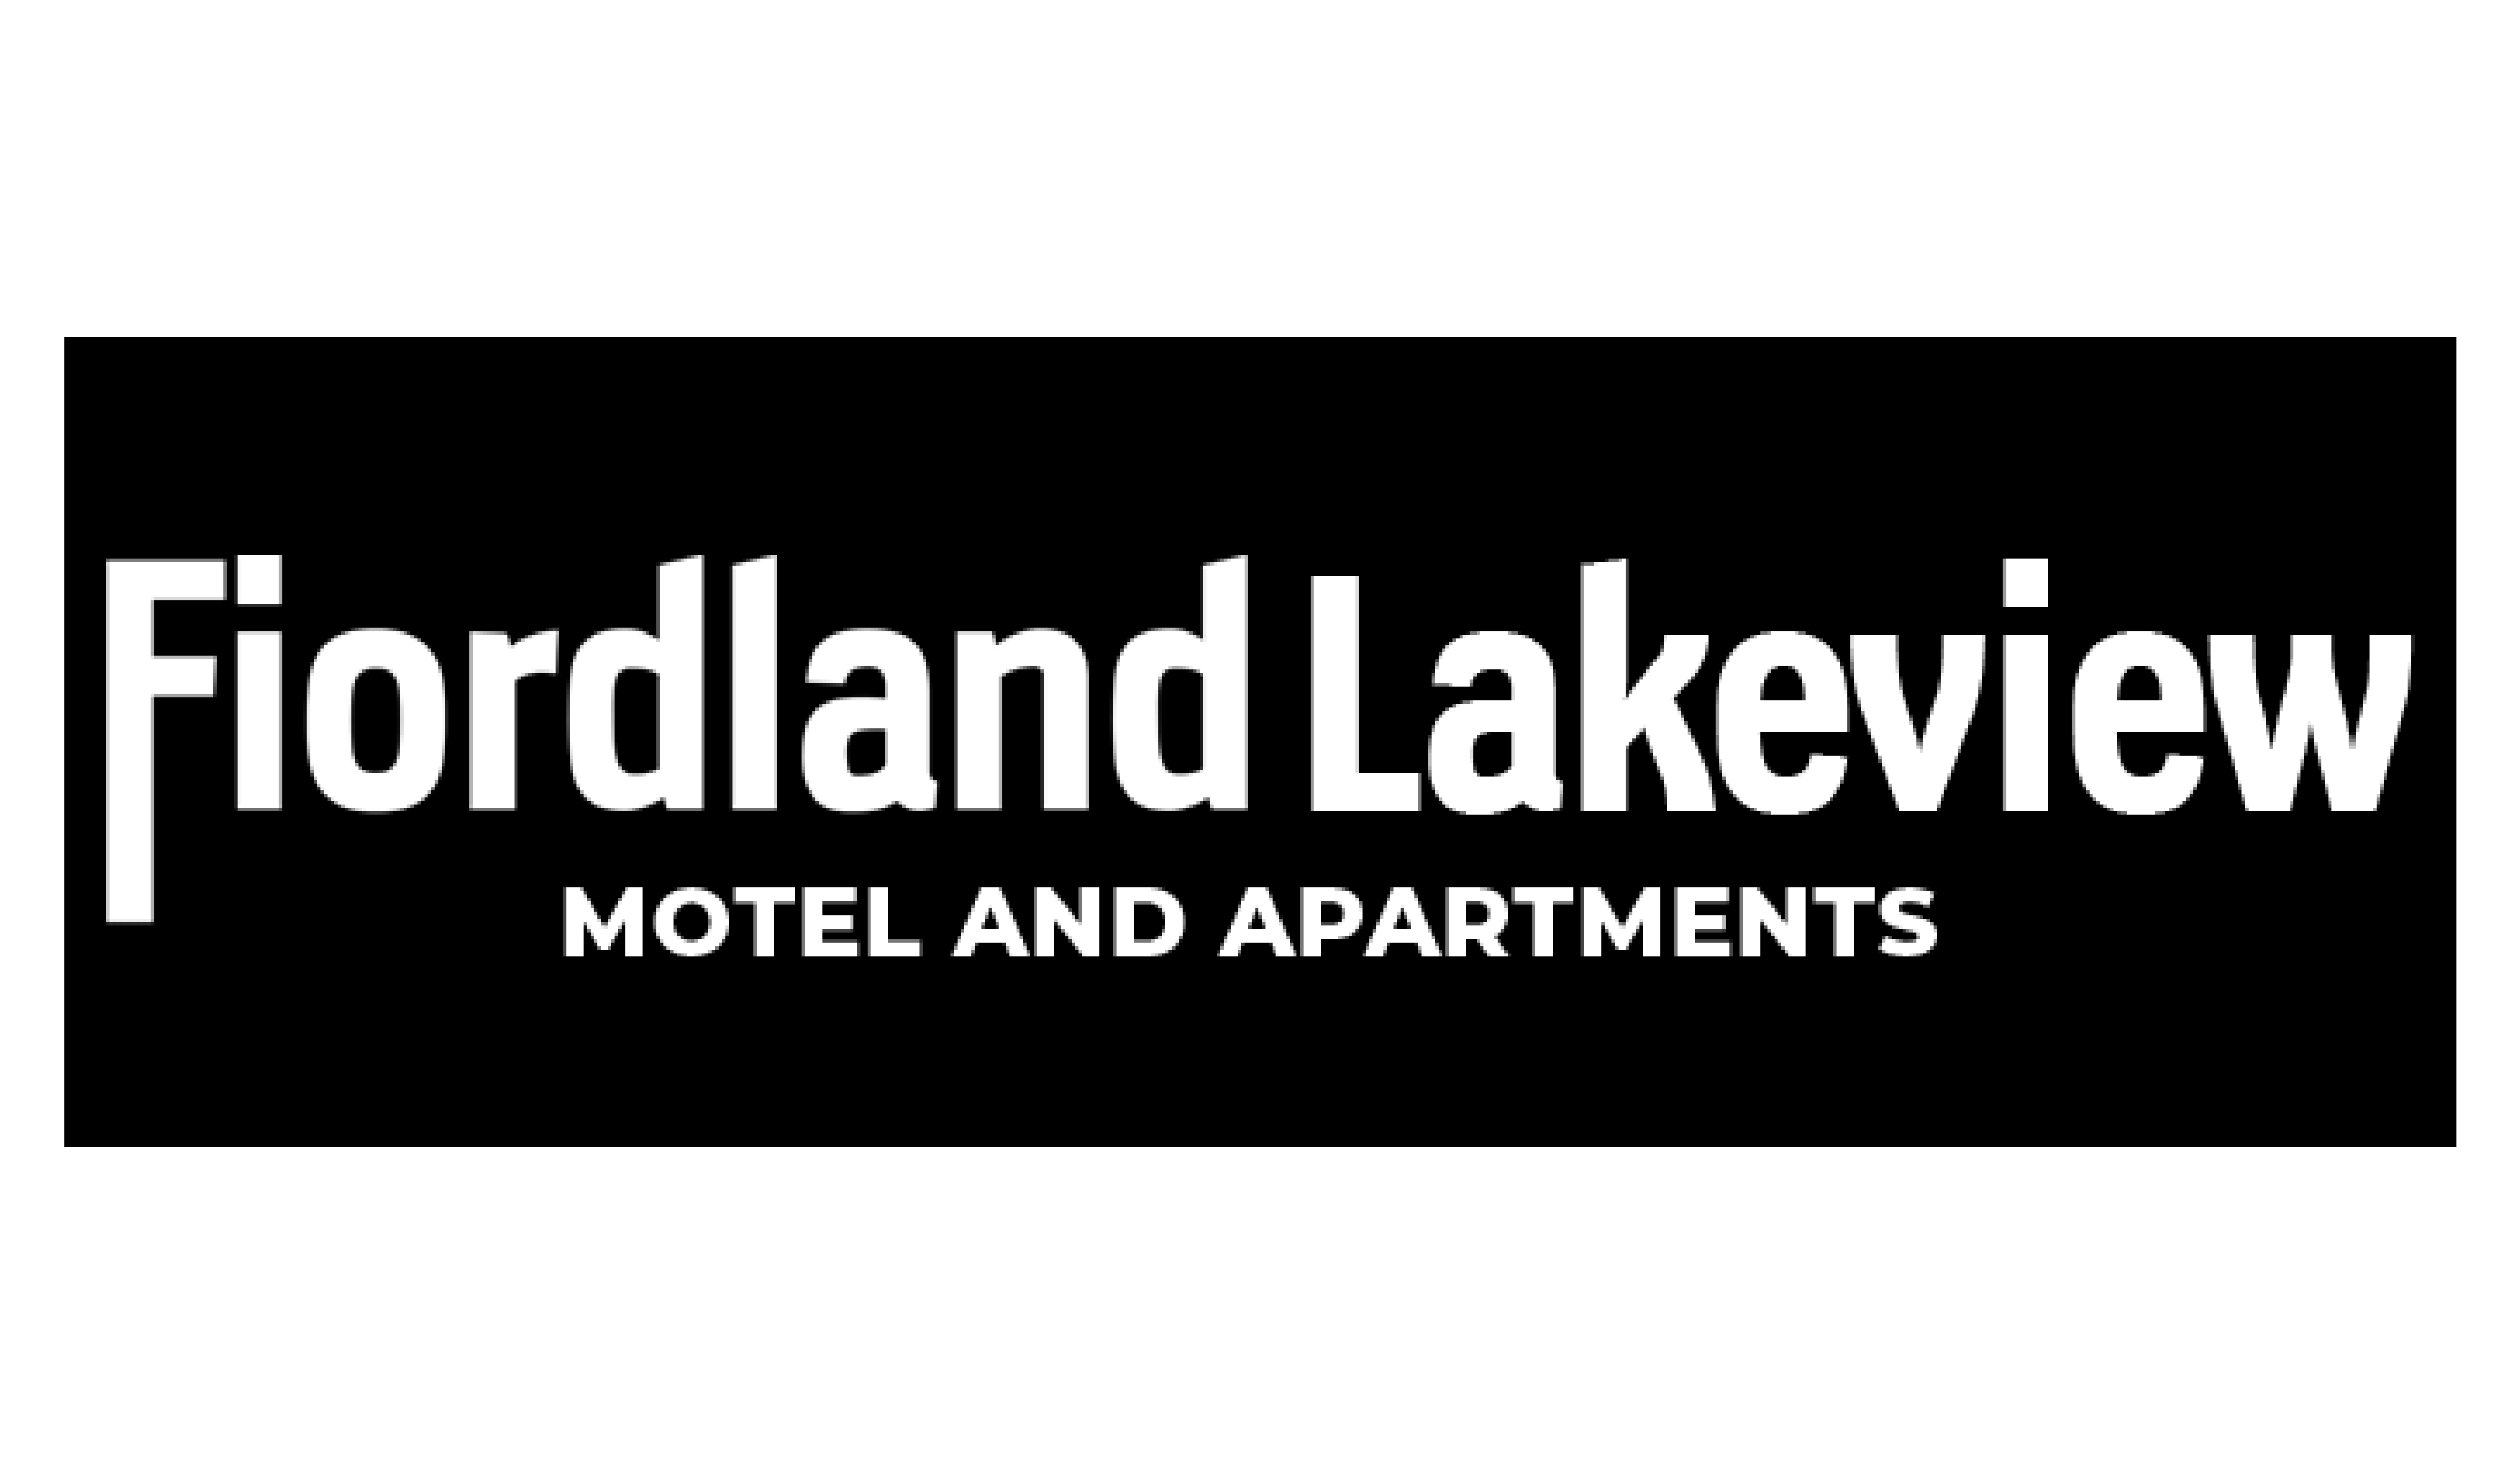 Fiordland Lakeview Motel and Apartments logo